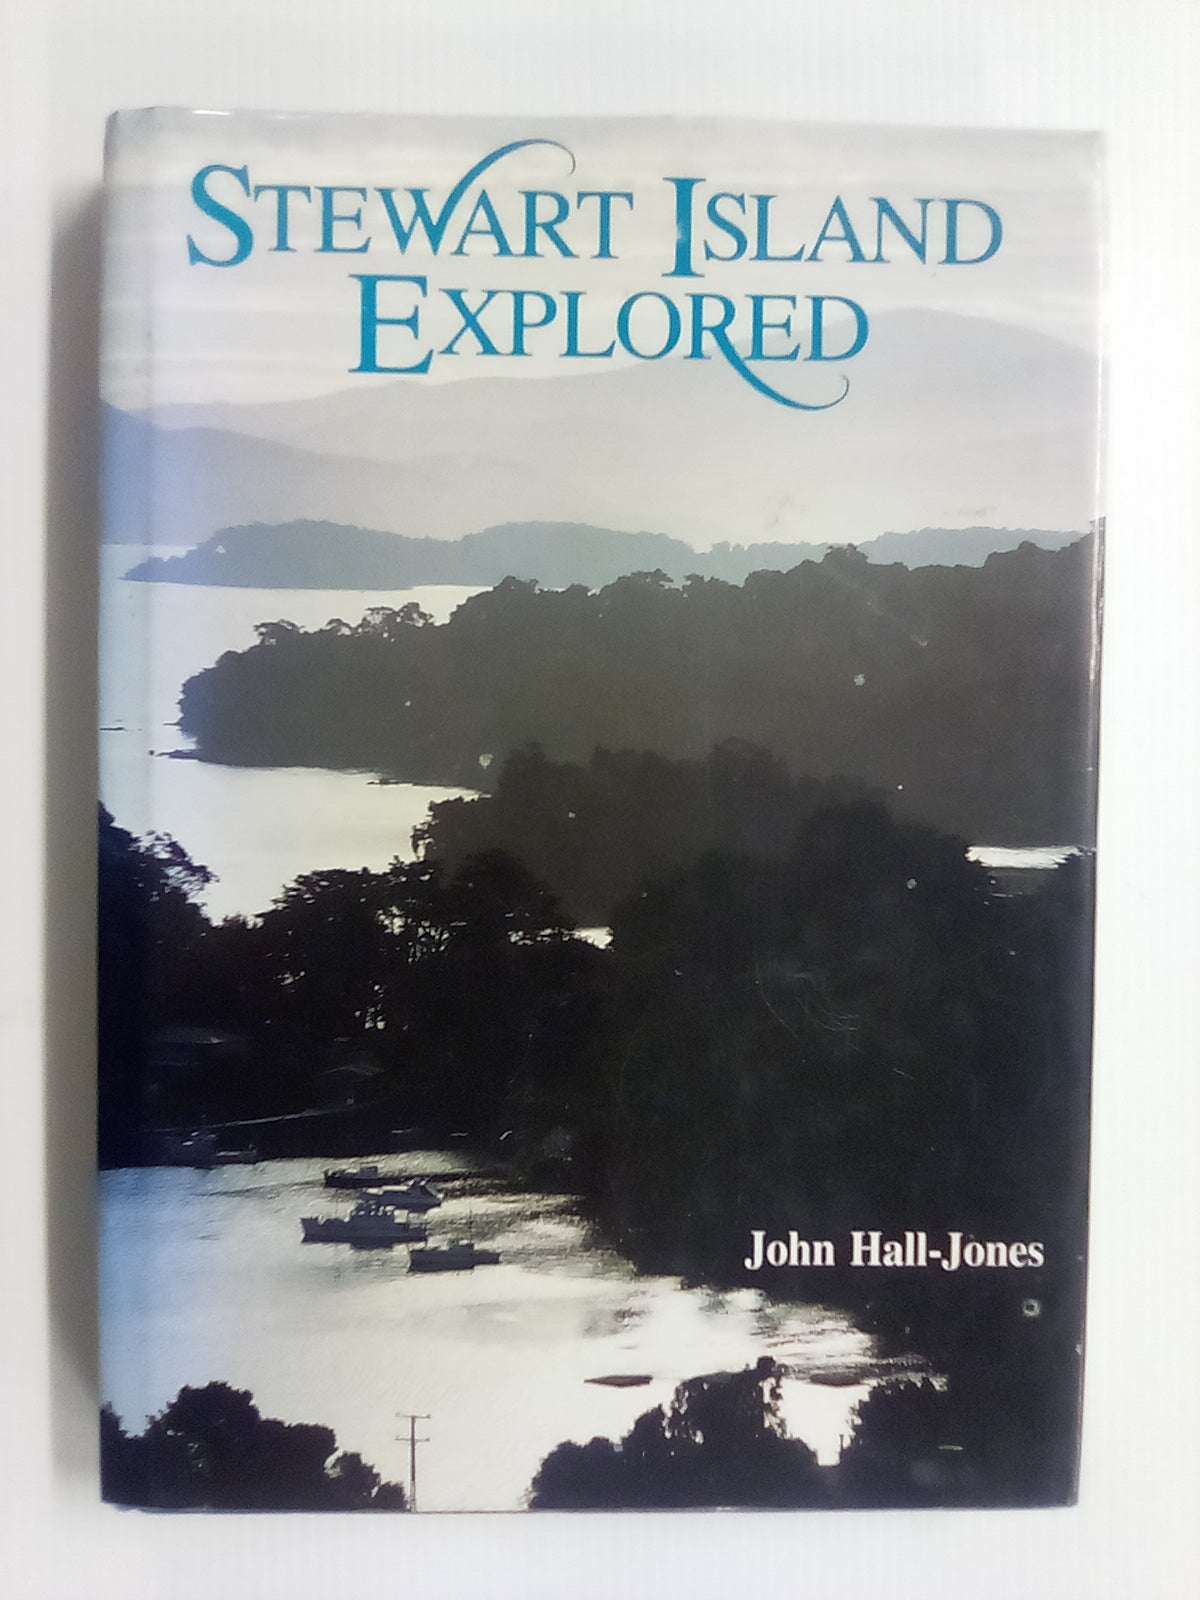 Stewart Island Explored by John Hall-Jones